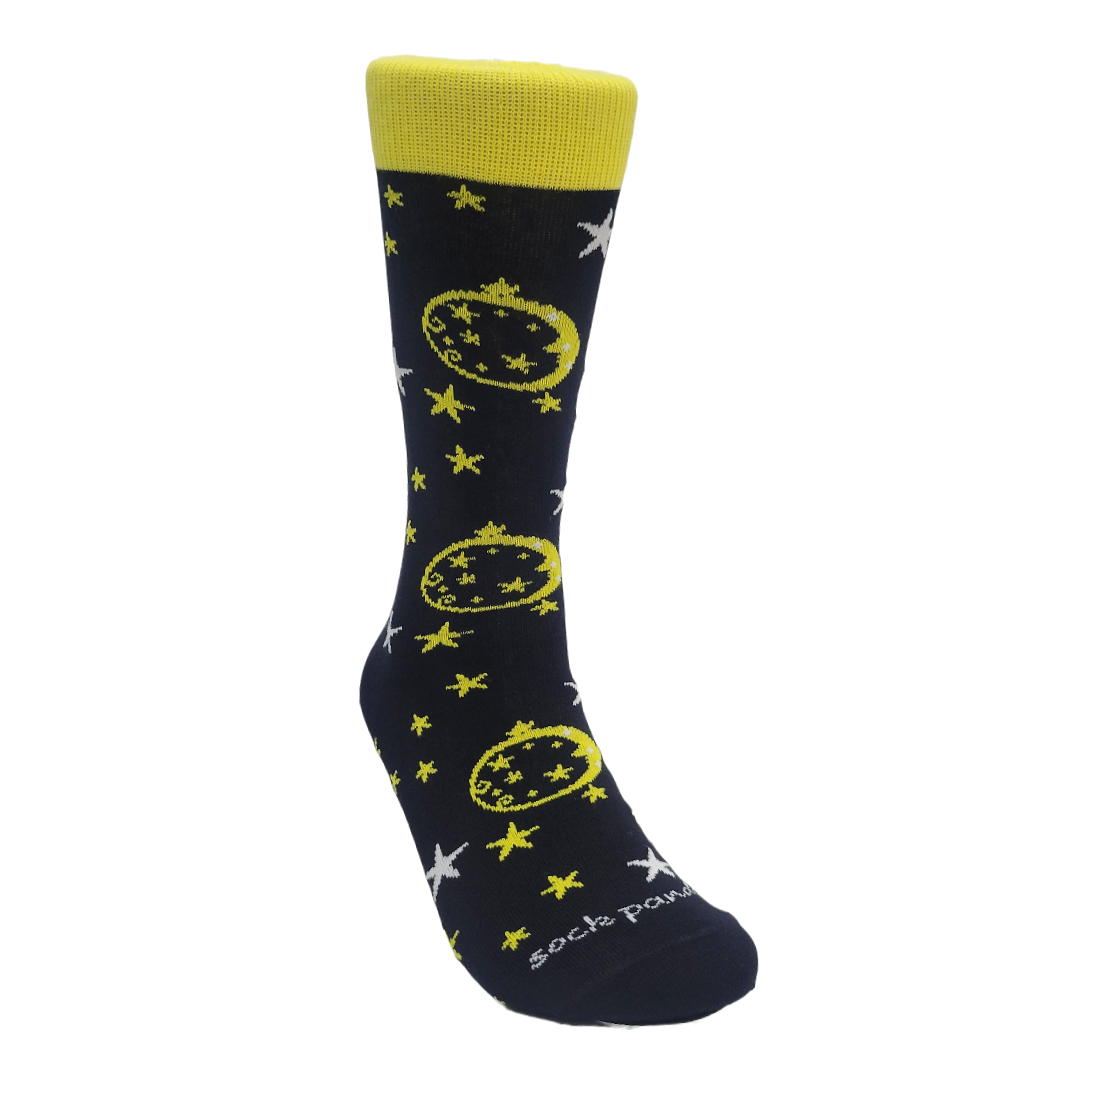 Night Sky Patterned Socks from the Sock Panda (Adult Medium)